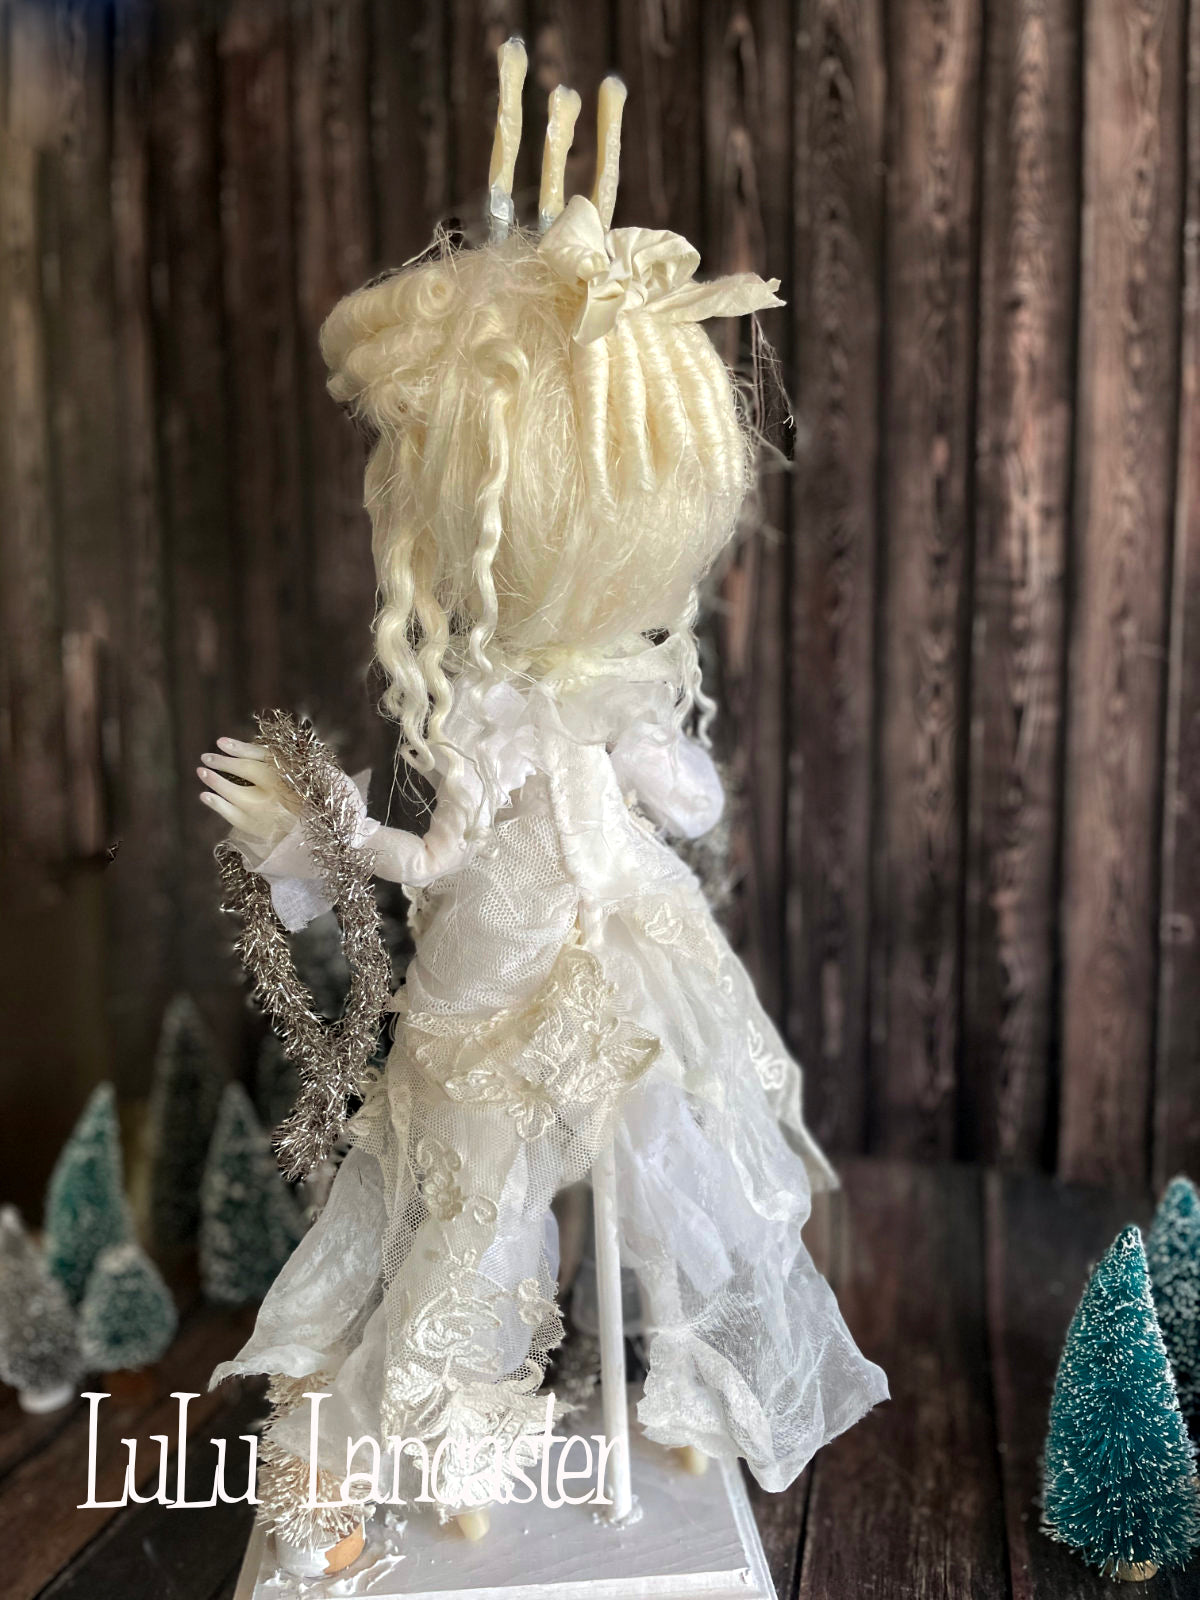 Parthena Christmas Ghost LuLu's Holiday Original LuLu Lancaster Art Doll